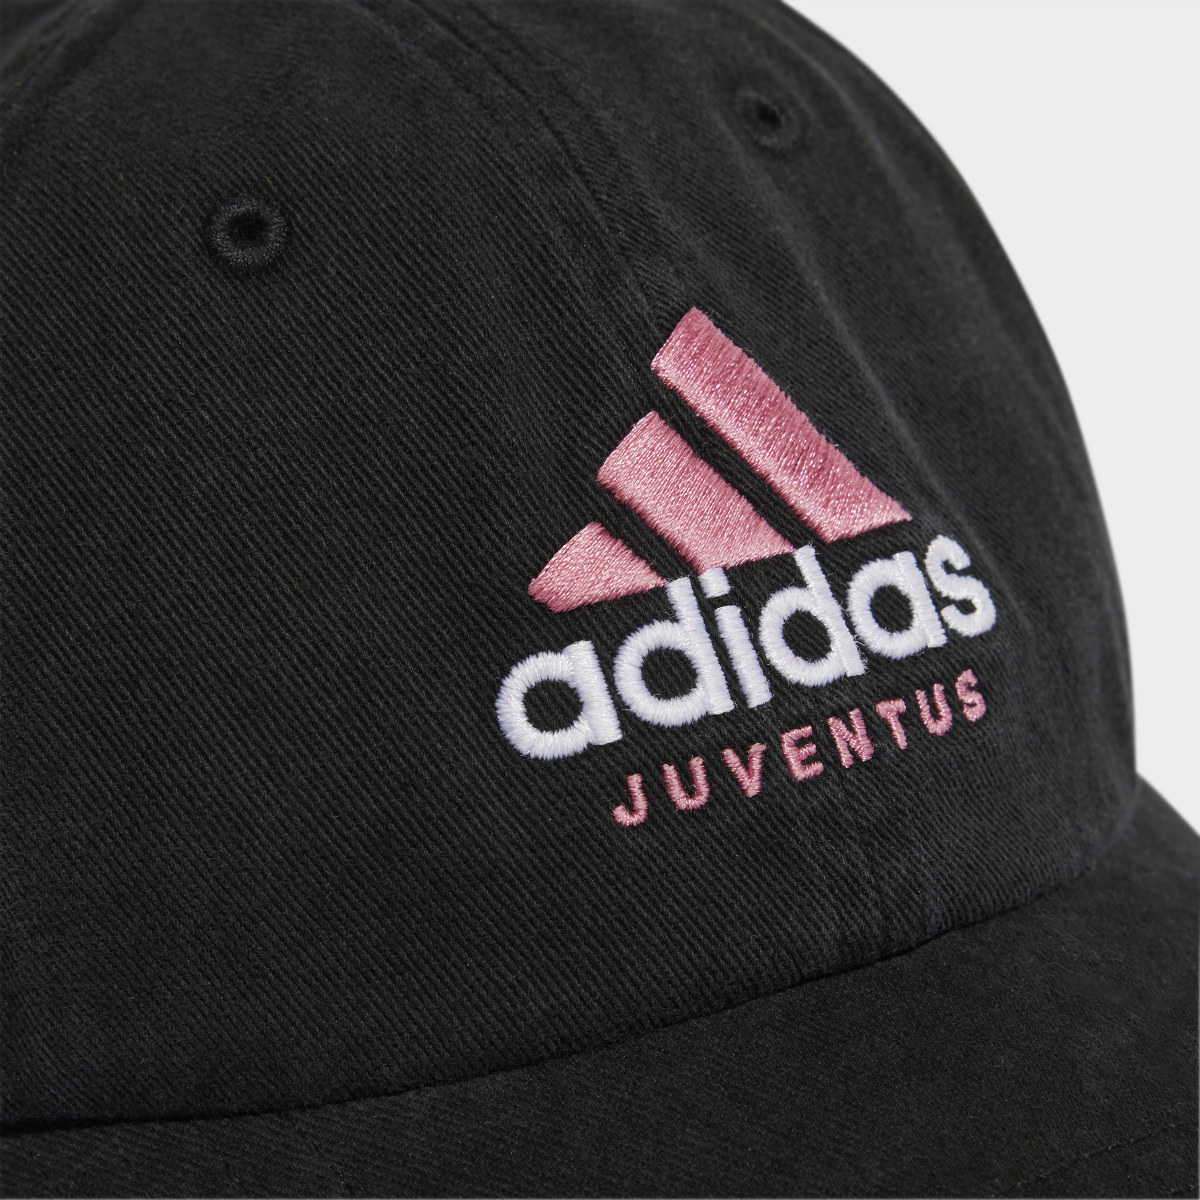 Adidas Juventus DNA Cap. 4